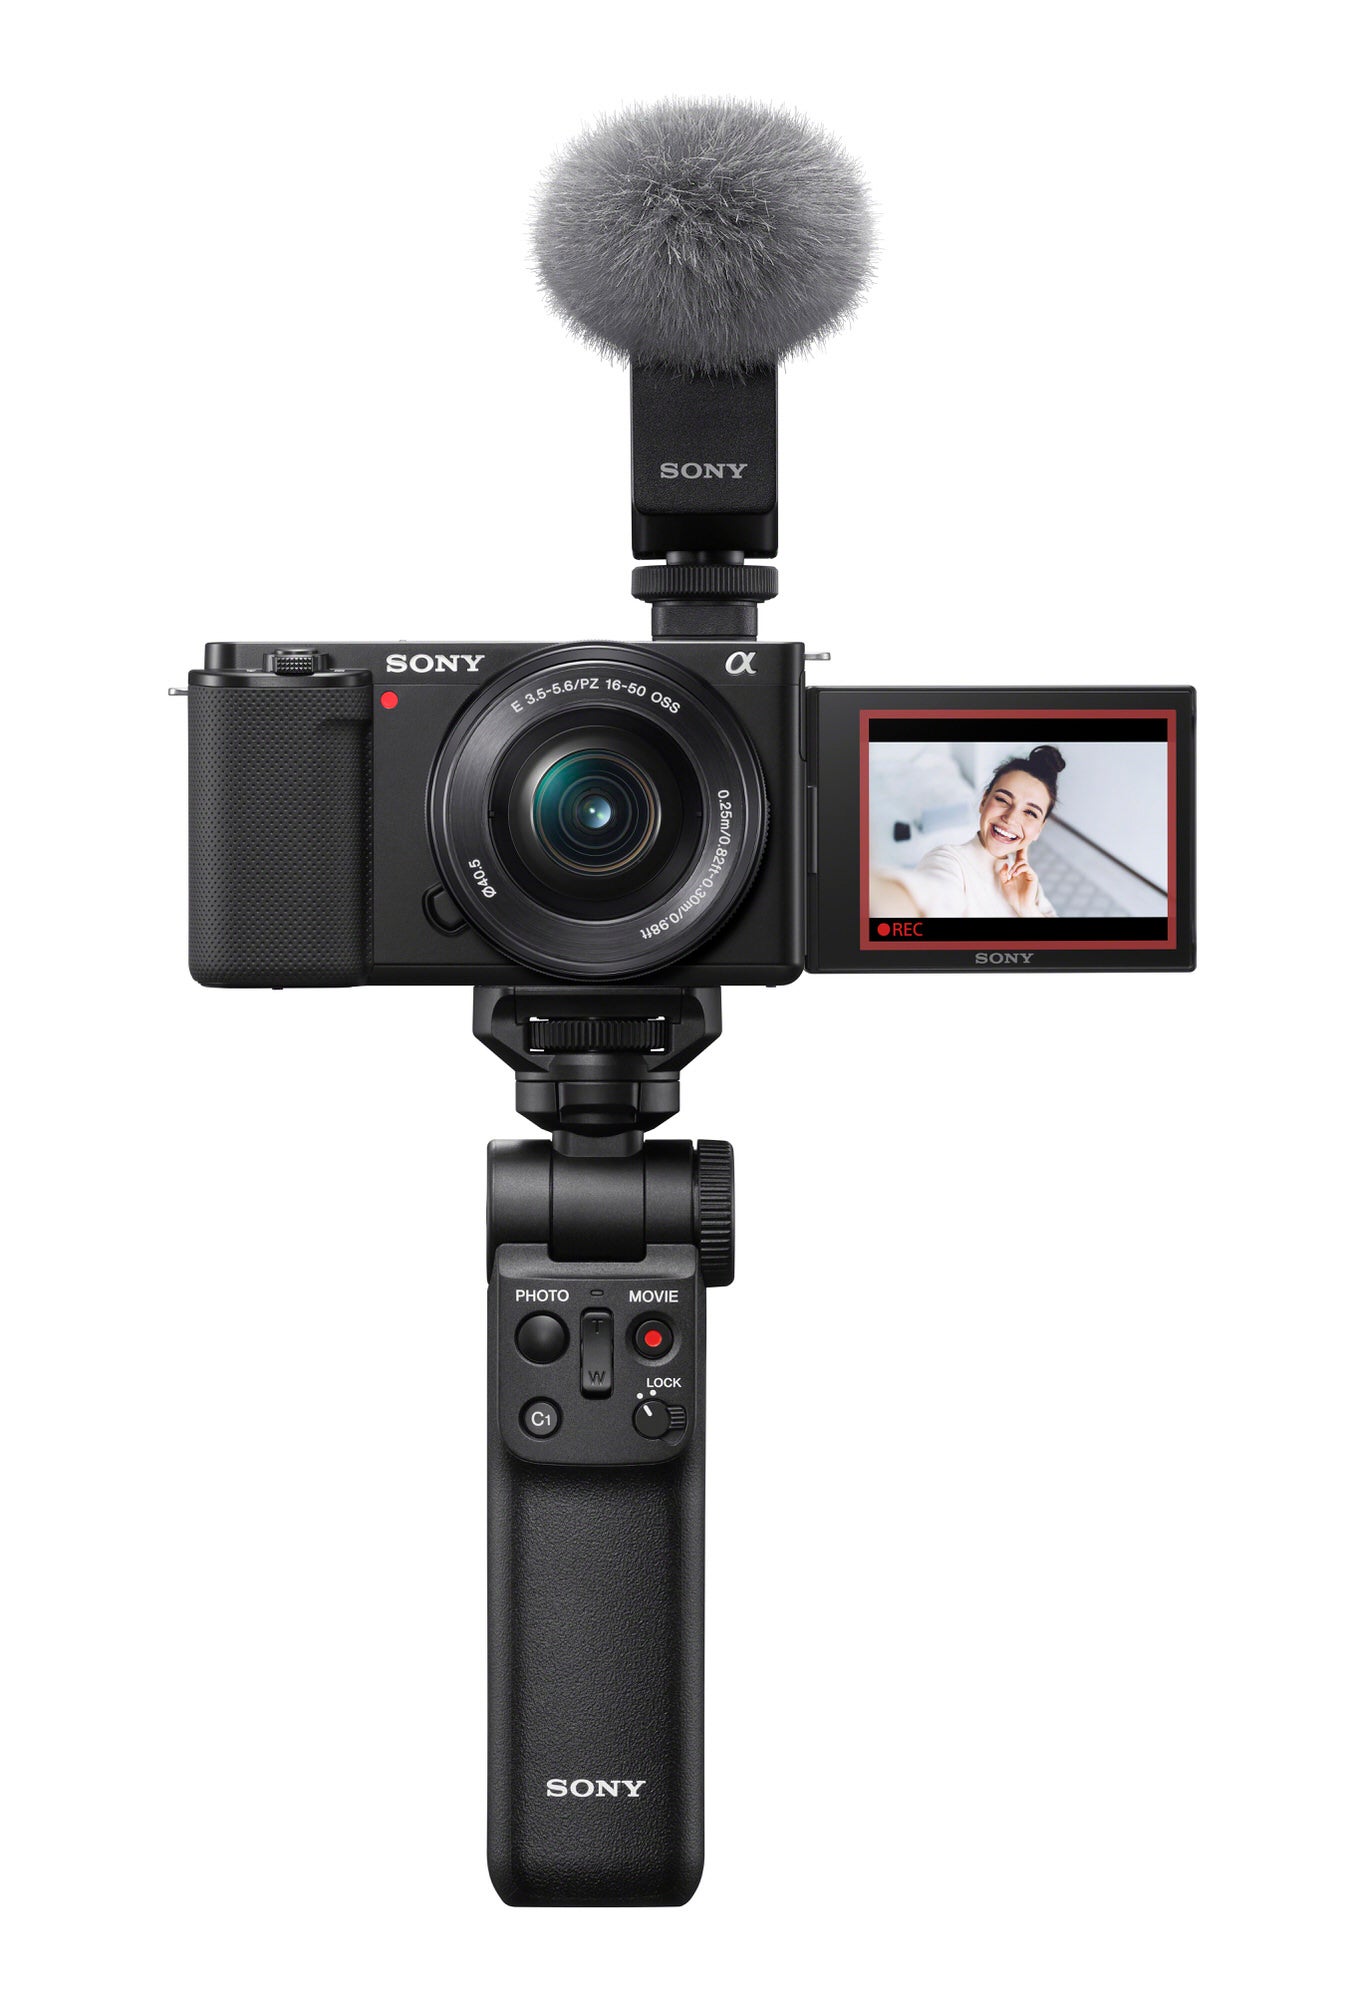 Sony ECM-B10 shotgun mic vlogging setup.